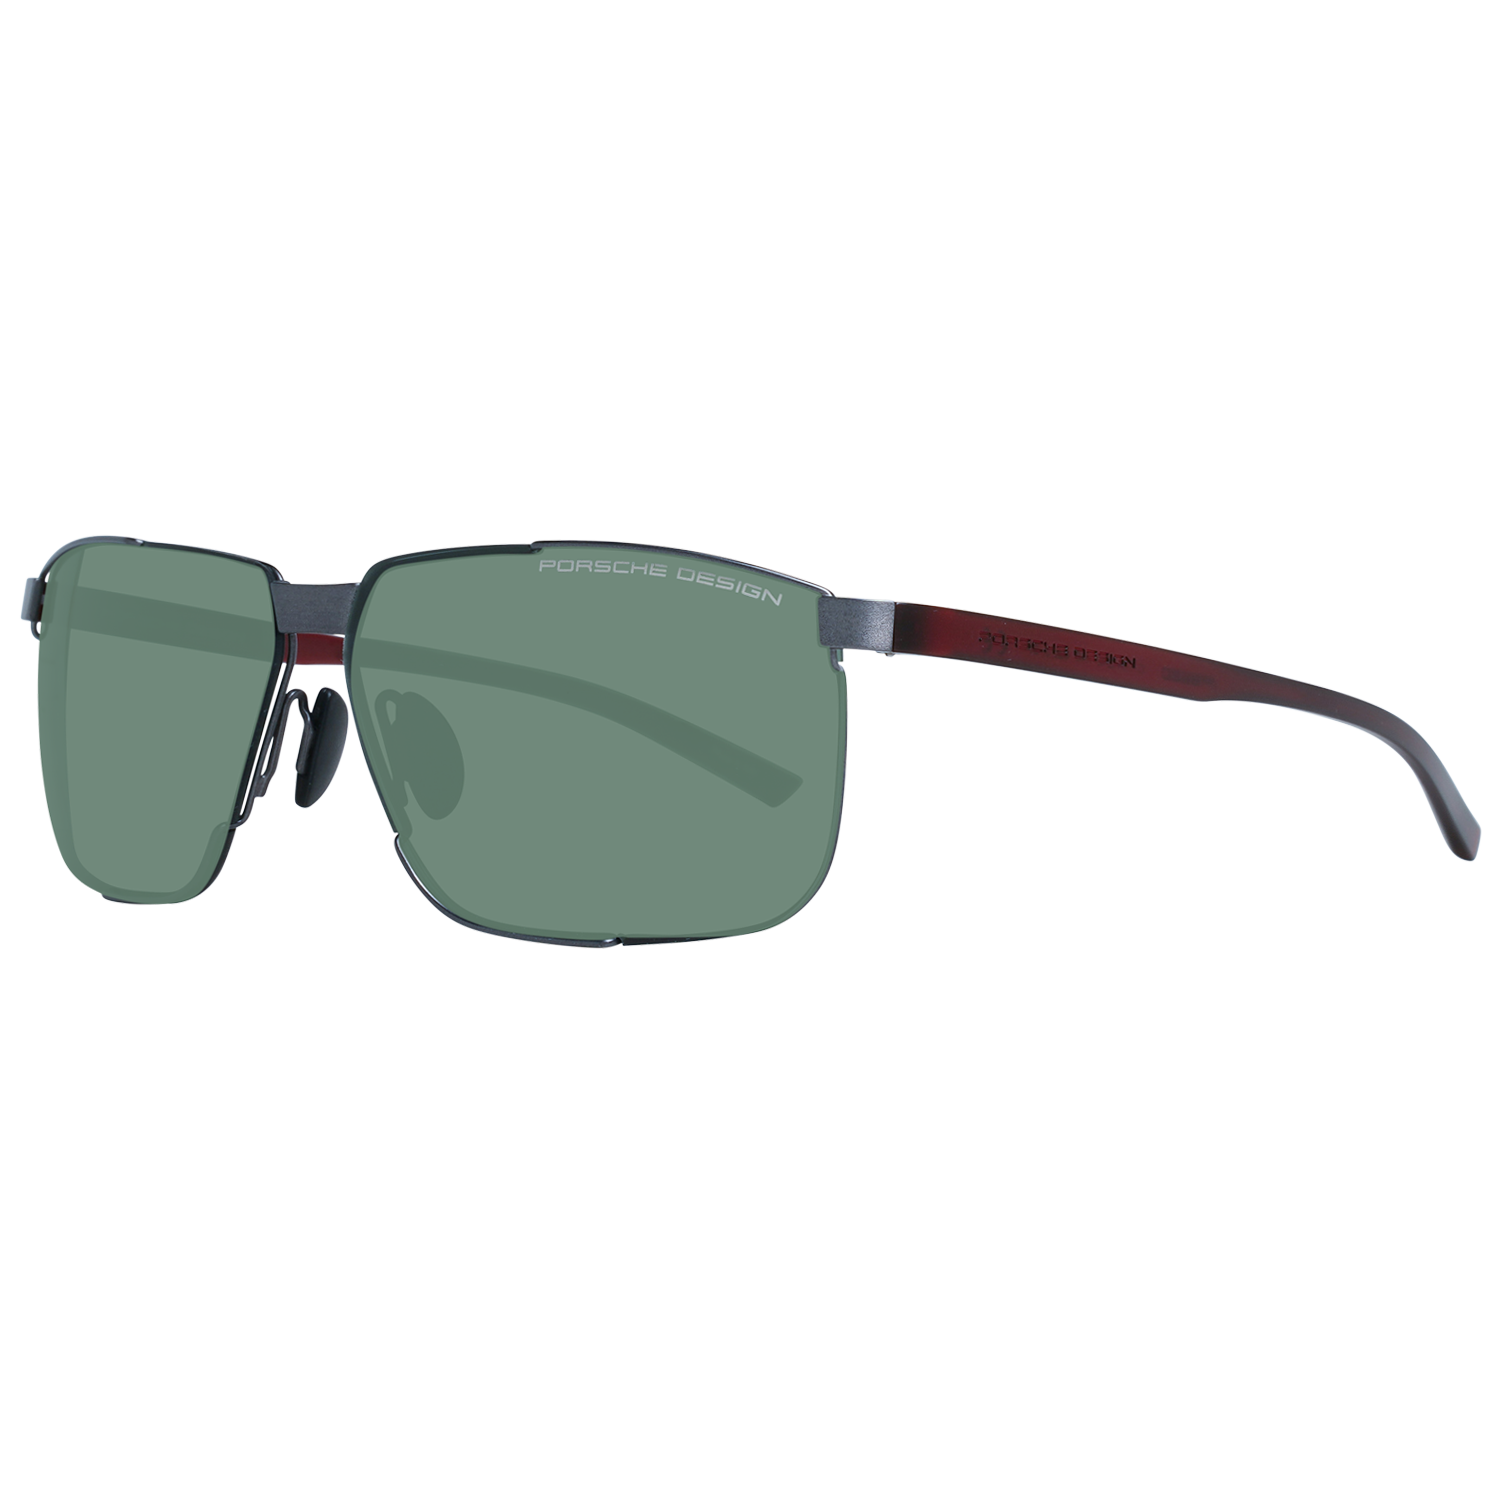 Porsche Design Sunglasses Porsche Design Sunglasses P8680 C 64 Eyeglasses Eyewear UK USA Australia 